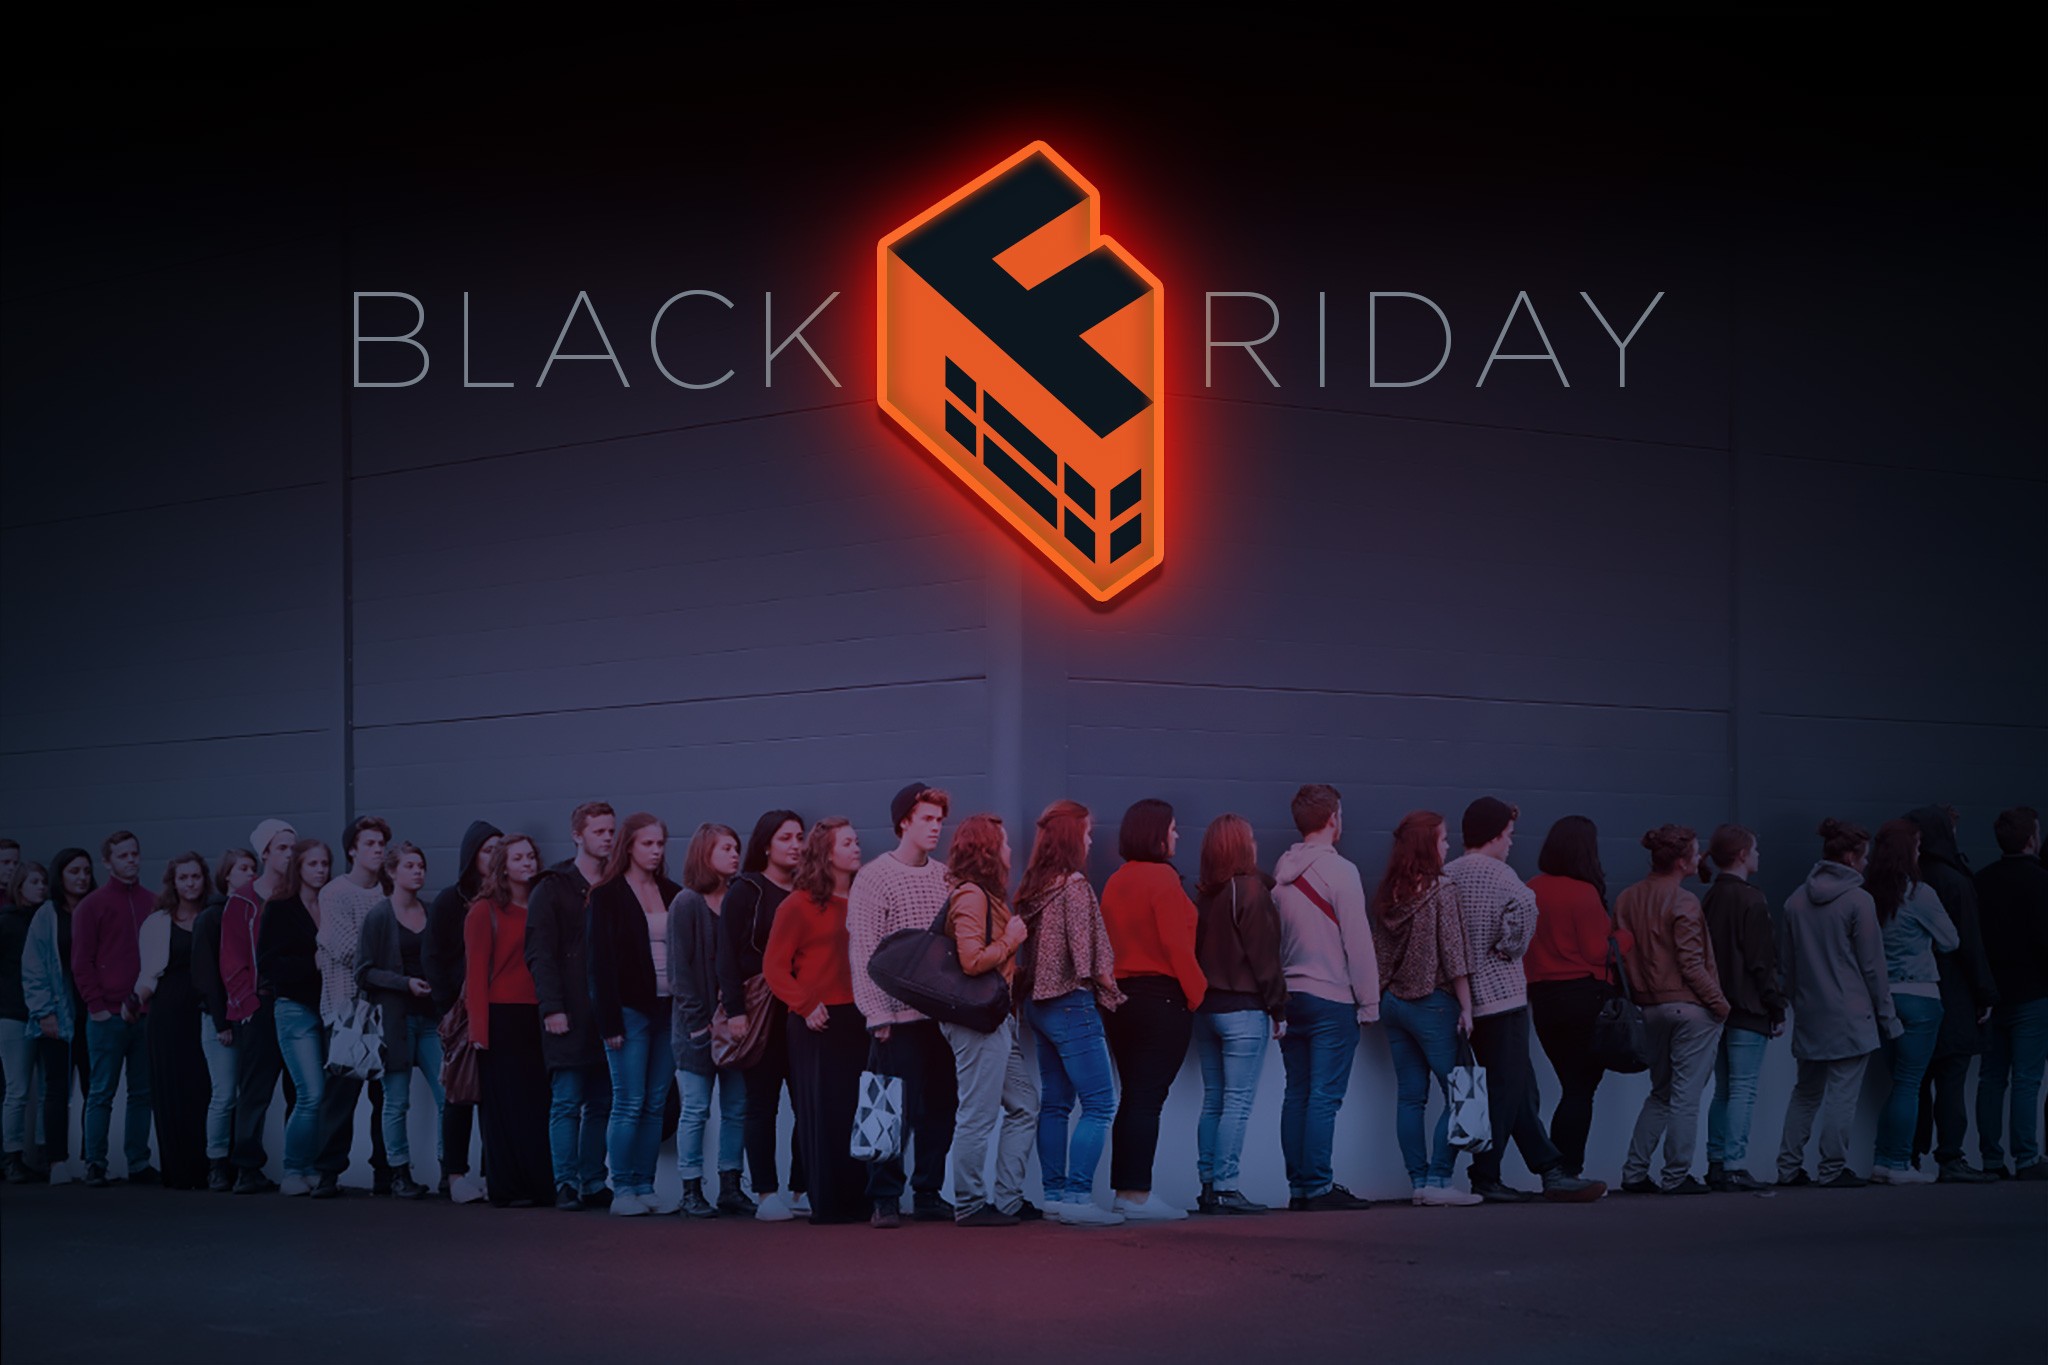 Black Friday Marketing Strategies for Casinos and Resorts